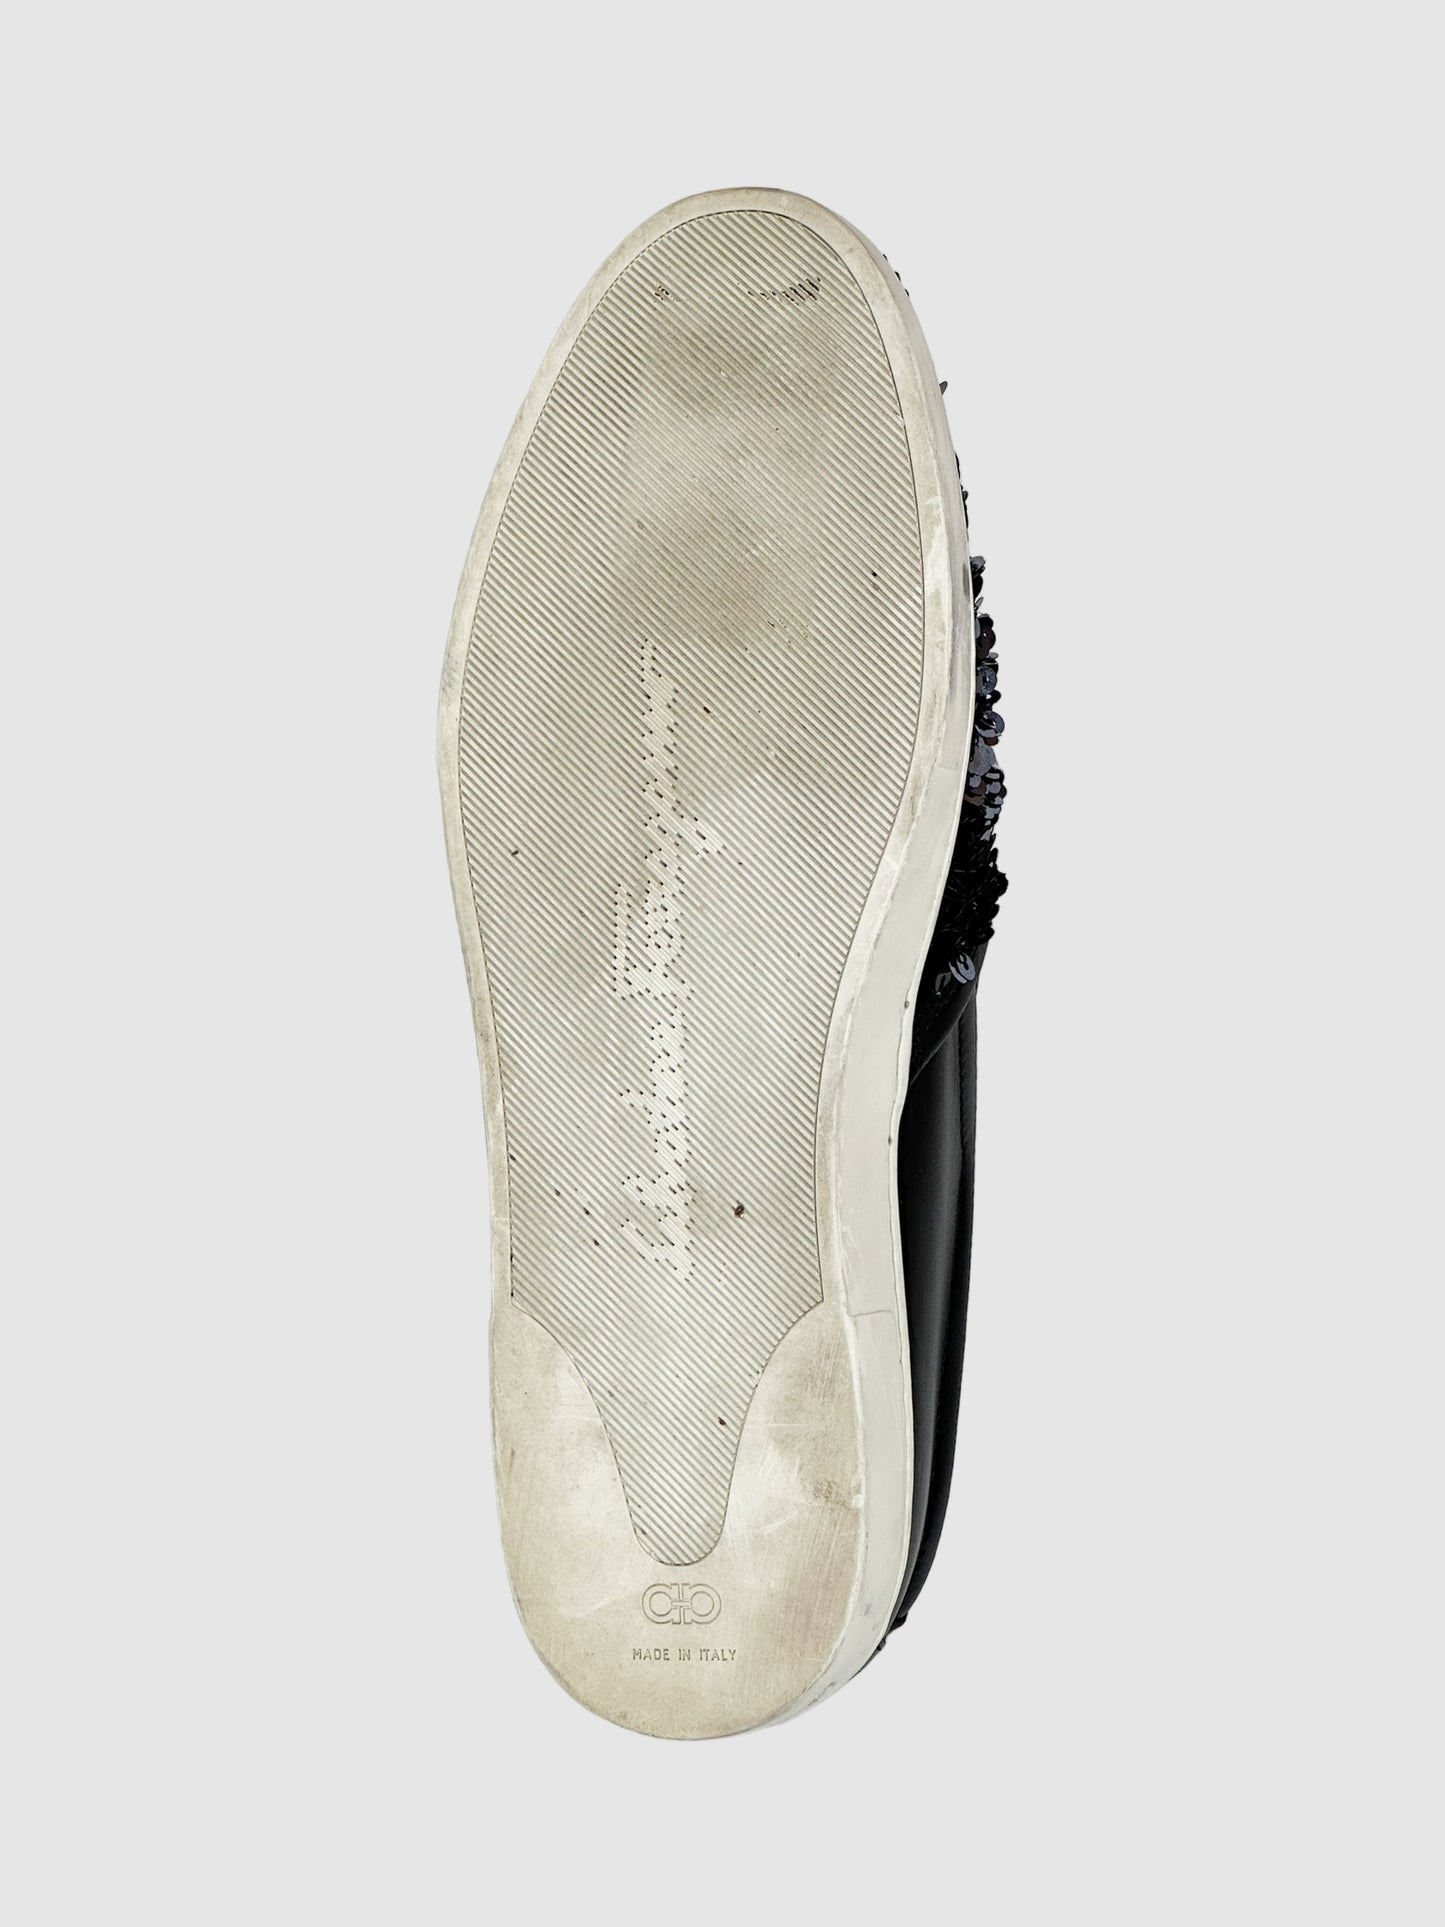 Salvatore Ferragamo Sequins Slip-On Sneakers - Size 7